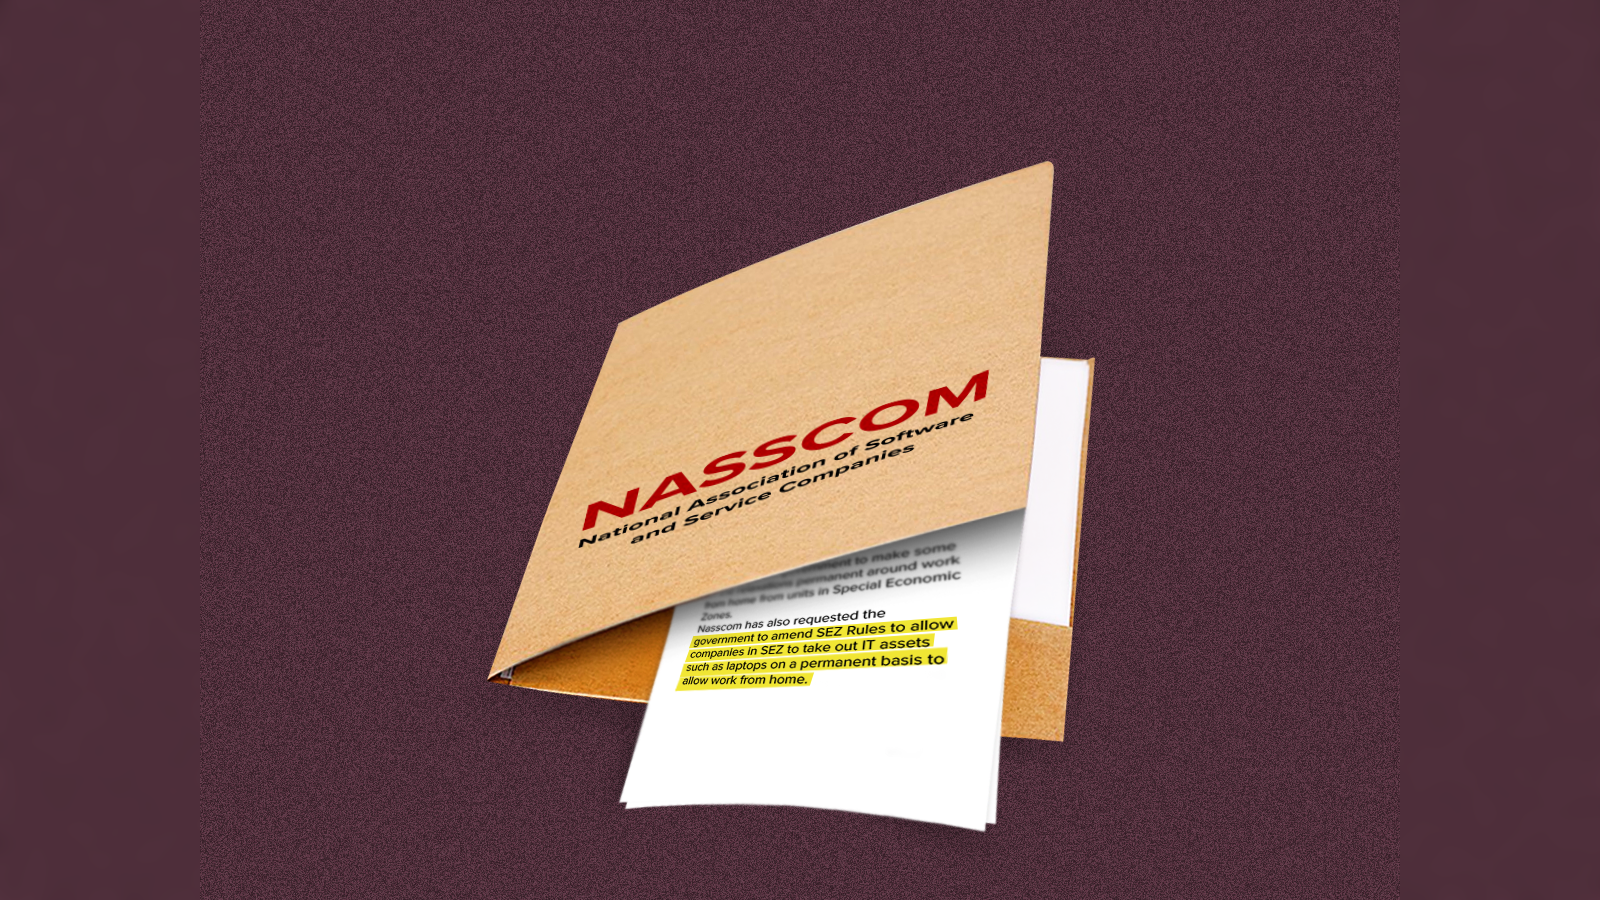 Nasscom: India's low code no code market stands at $400 million